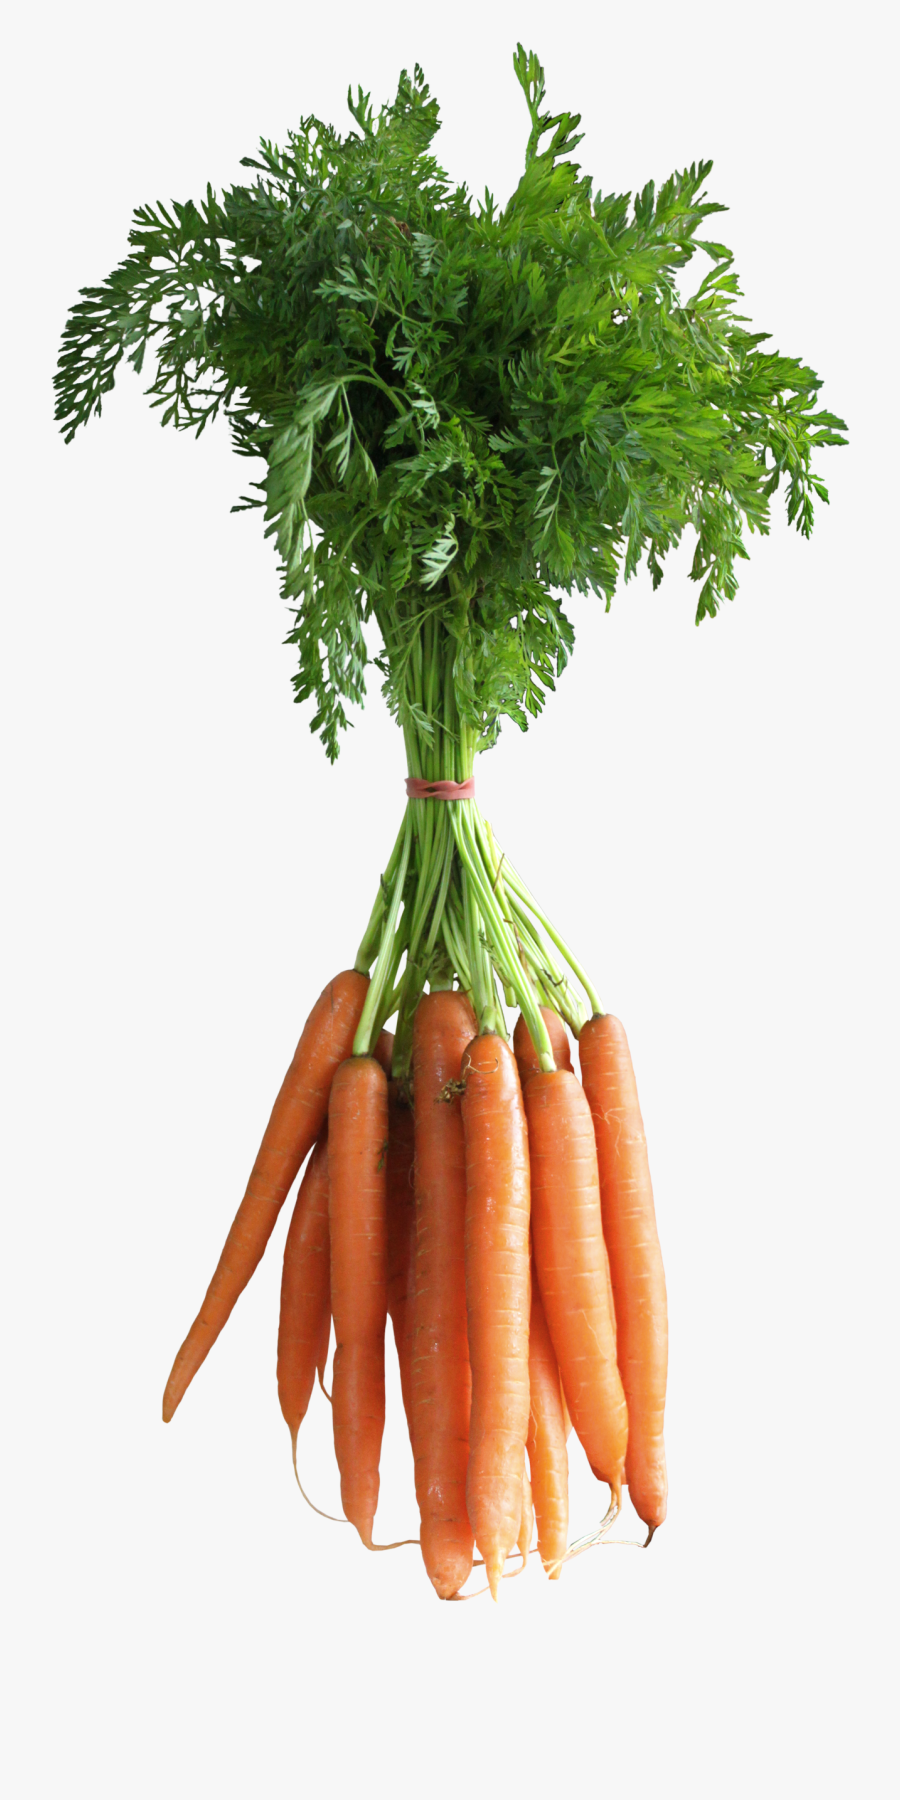 Broccoli Clipart Carrot - Carrot Png Download, Transparent Clipart